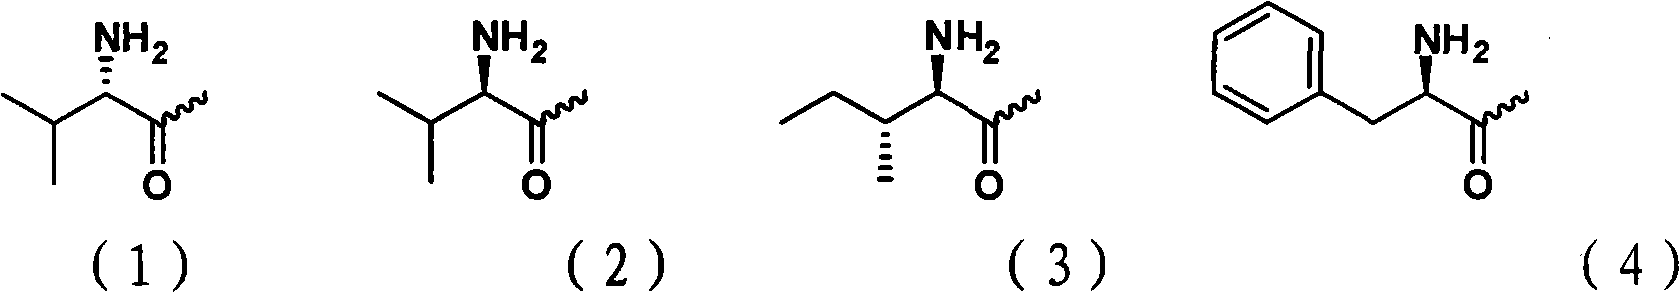 Cytarabine 5'-O-amino-acid ester, salts thereof and preparation method thereof